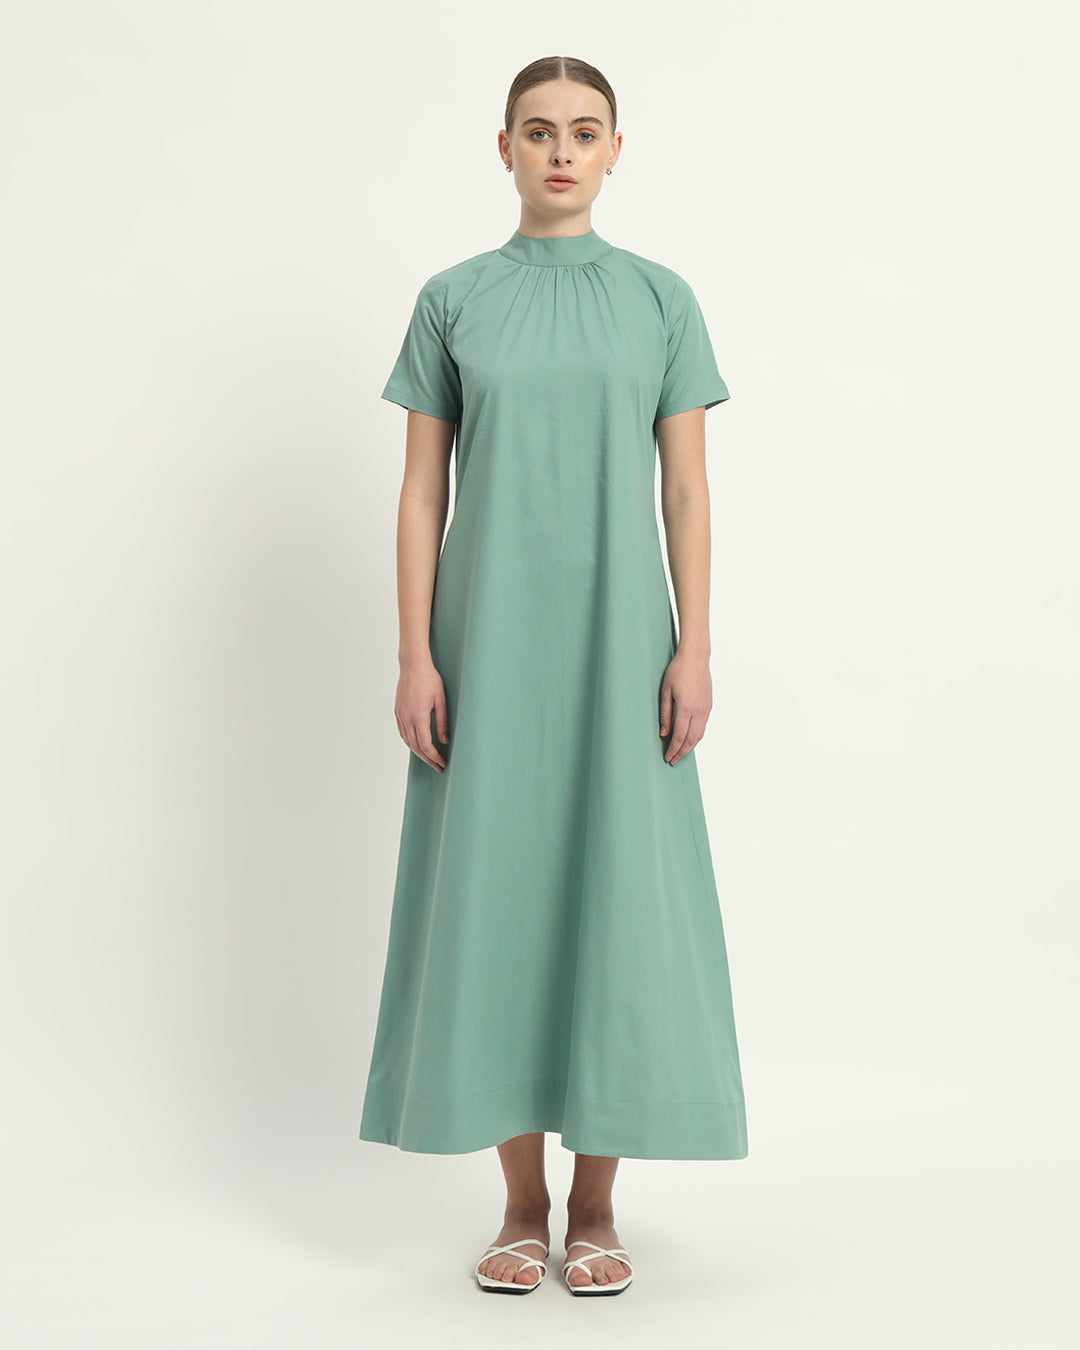 The Hermon Mint Cotton Dress